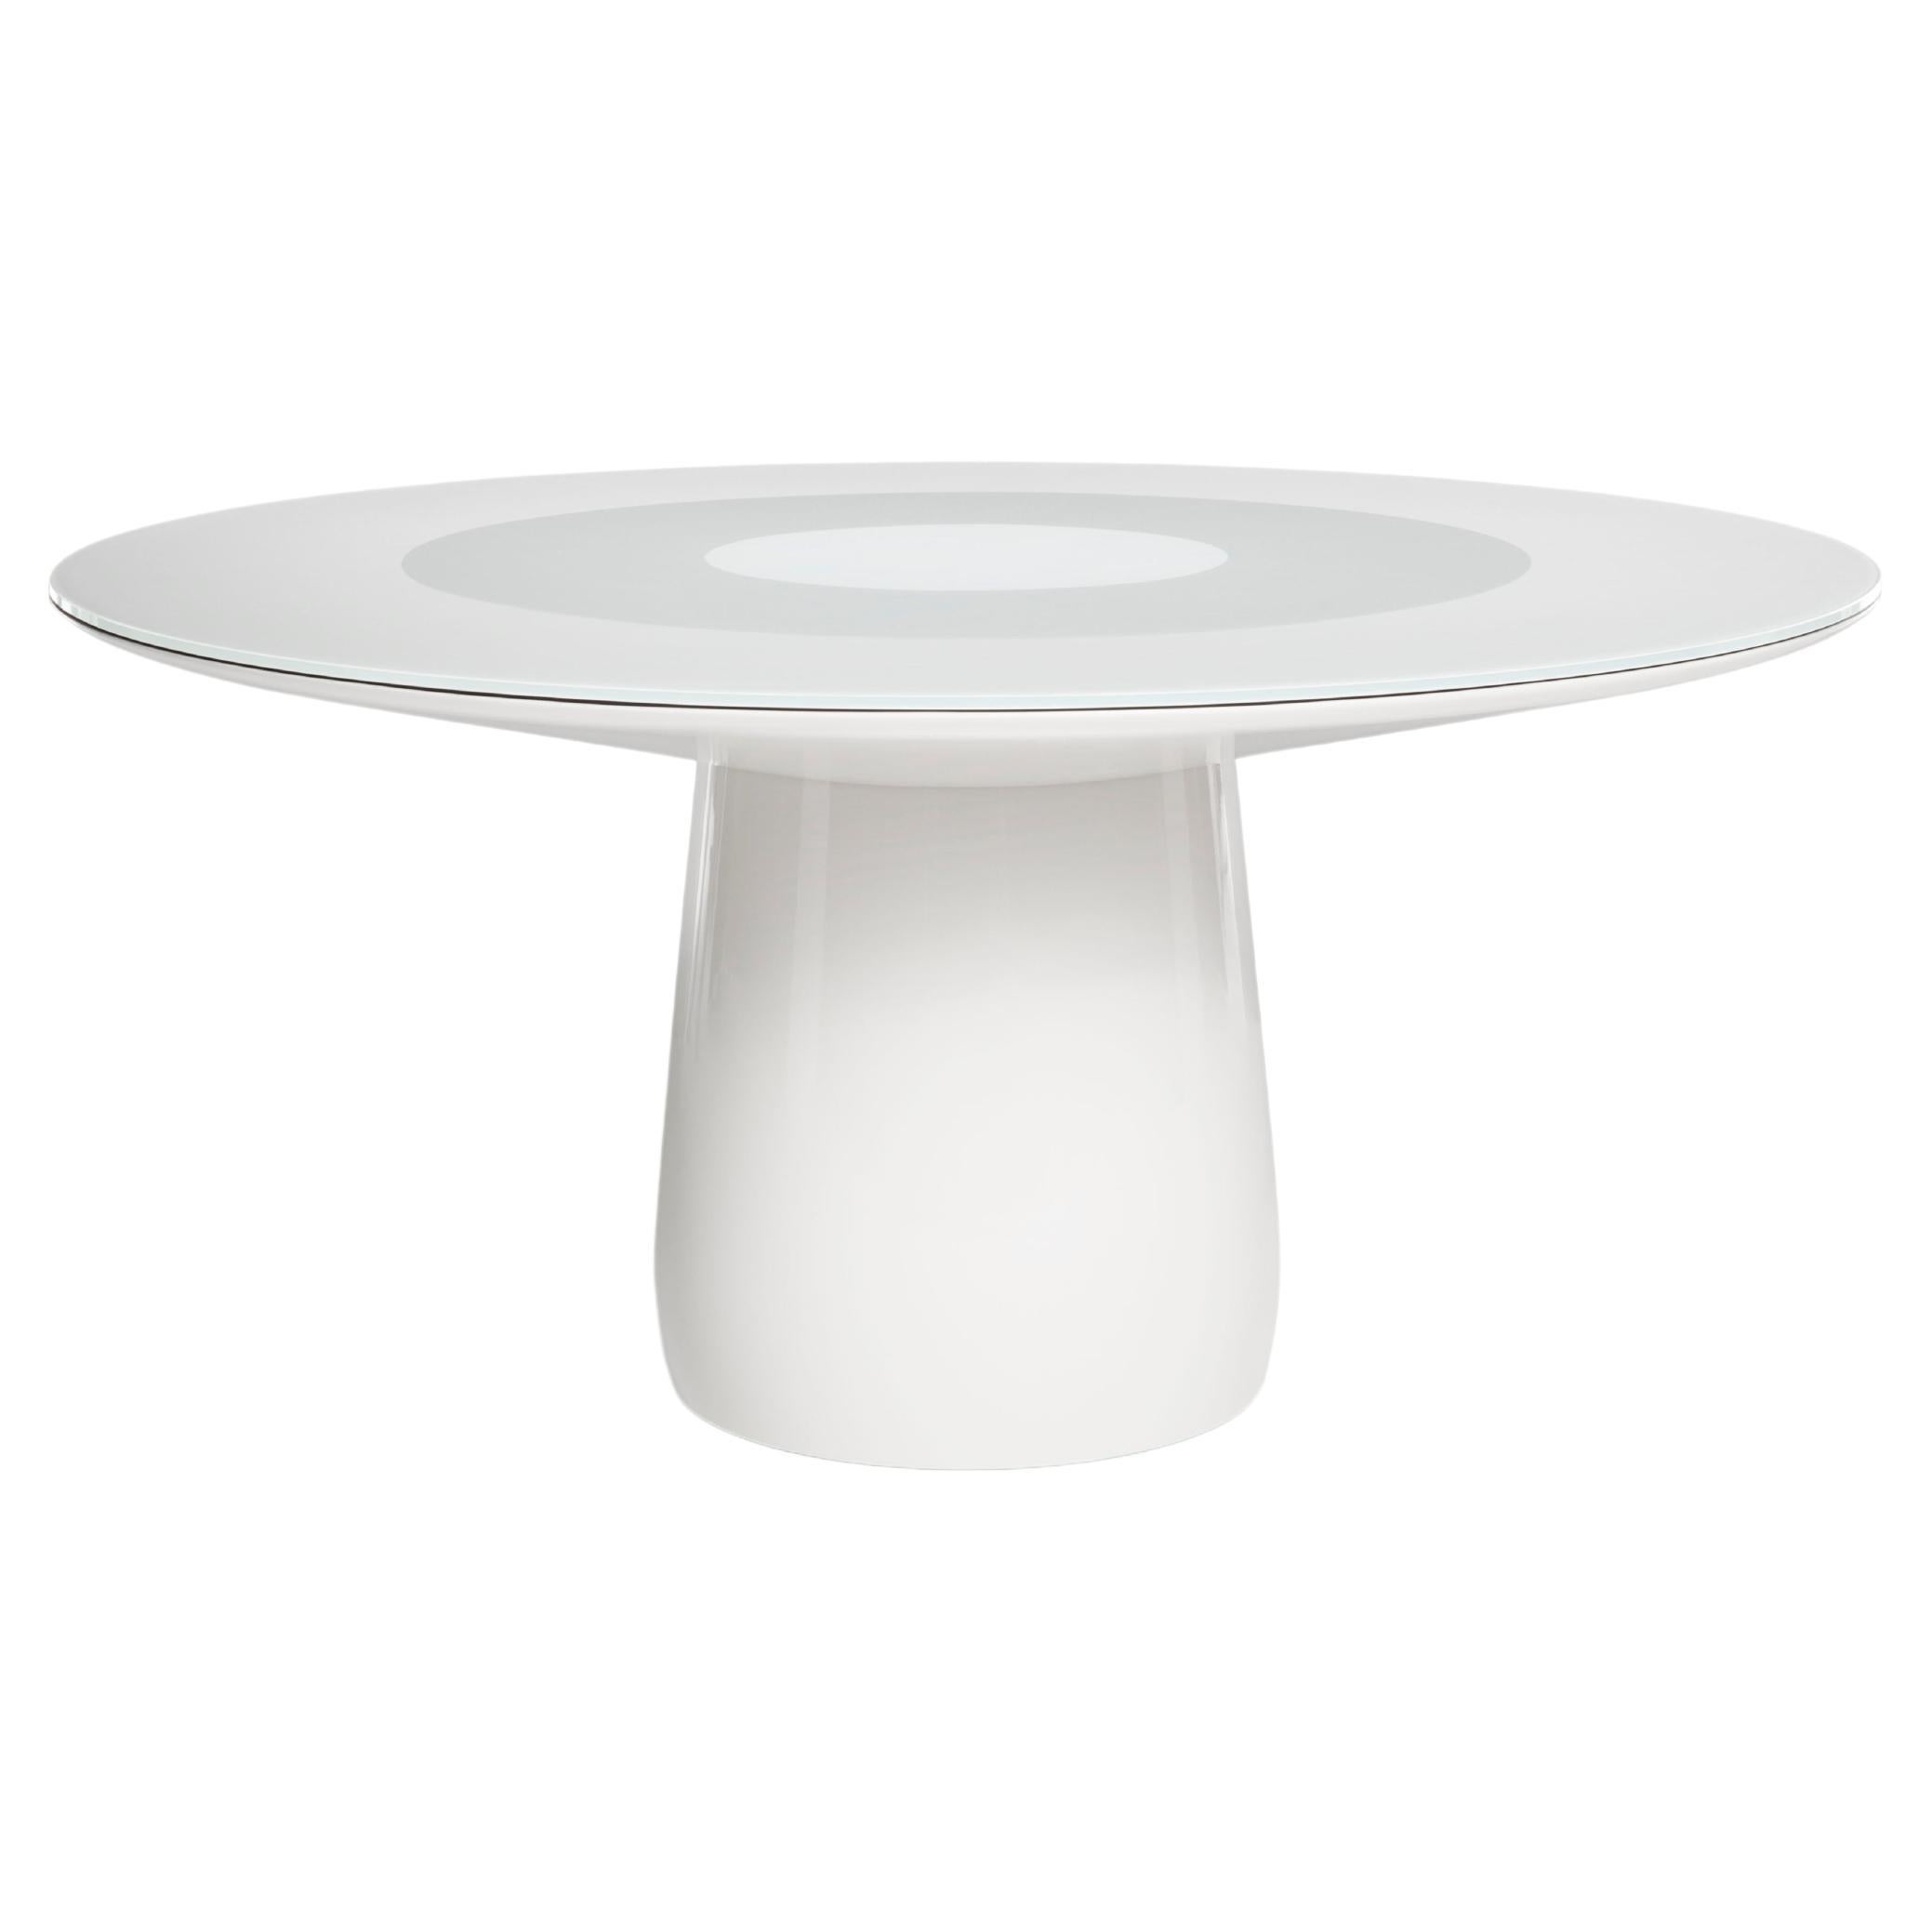 Baleri Italia Roundel Table with white Glass Top, Claesson Koivisto Rune For Sale